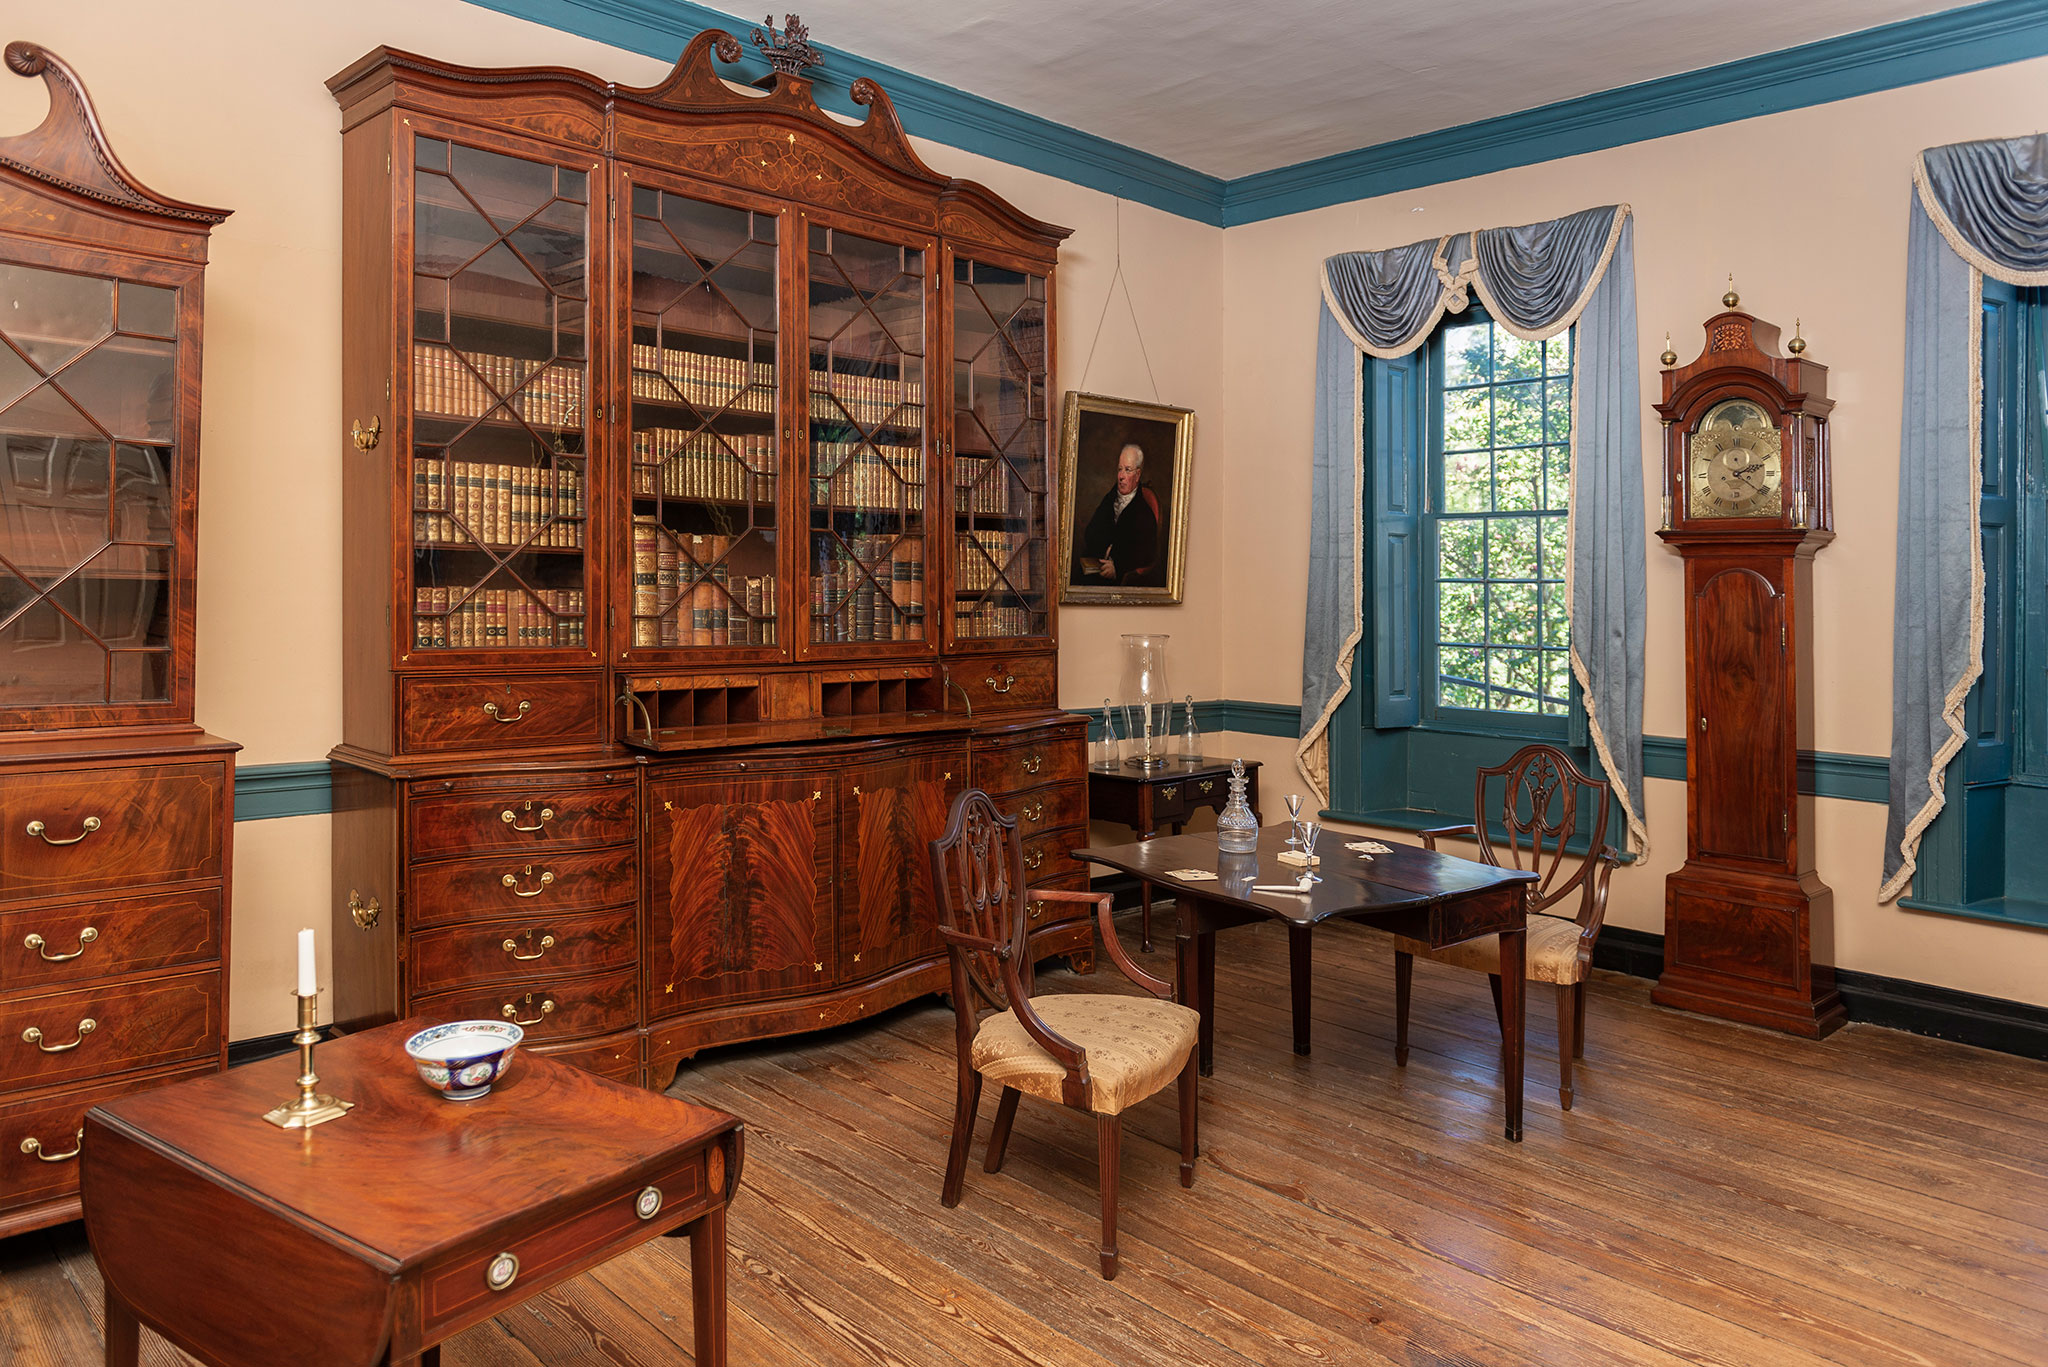 Early Furniture: A Closer Look at Enslaved Craftsmanship